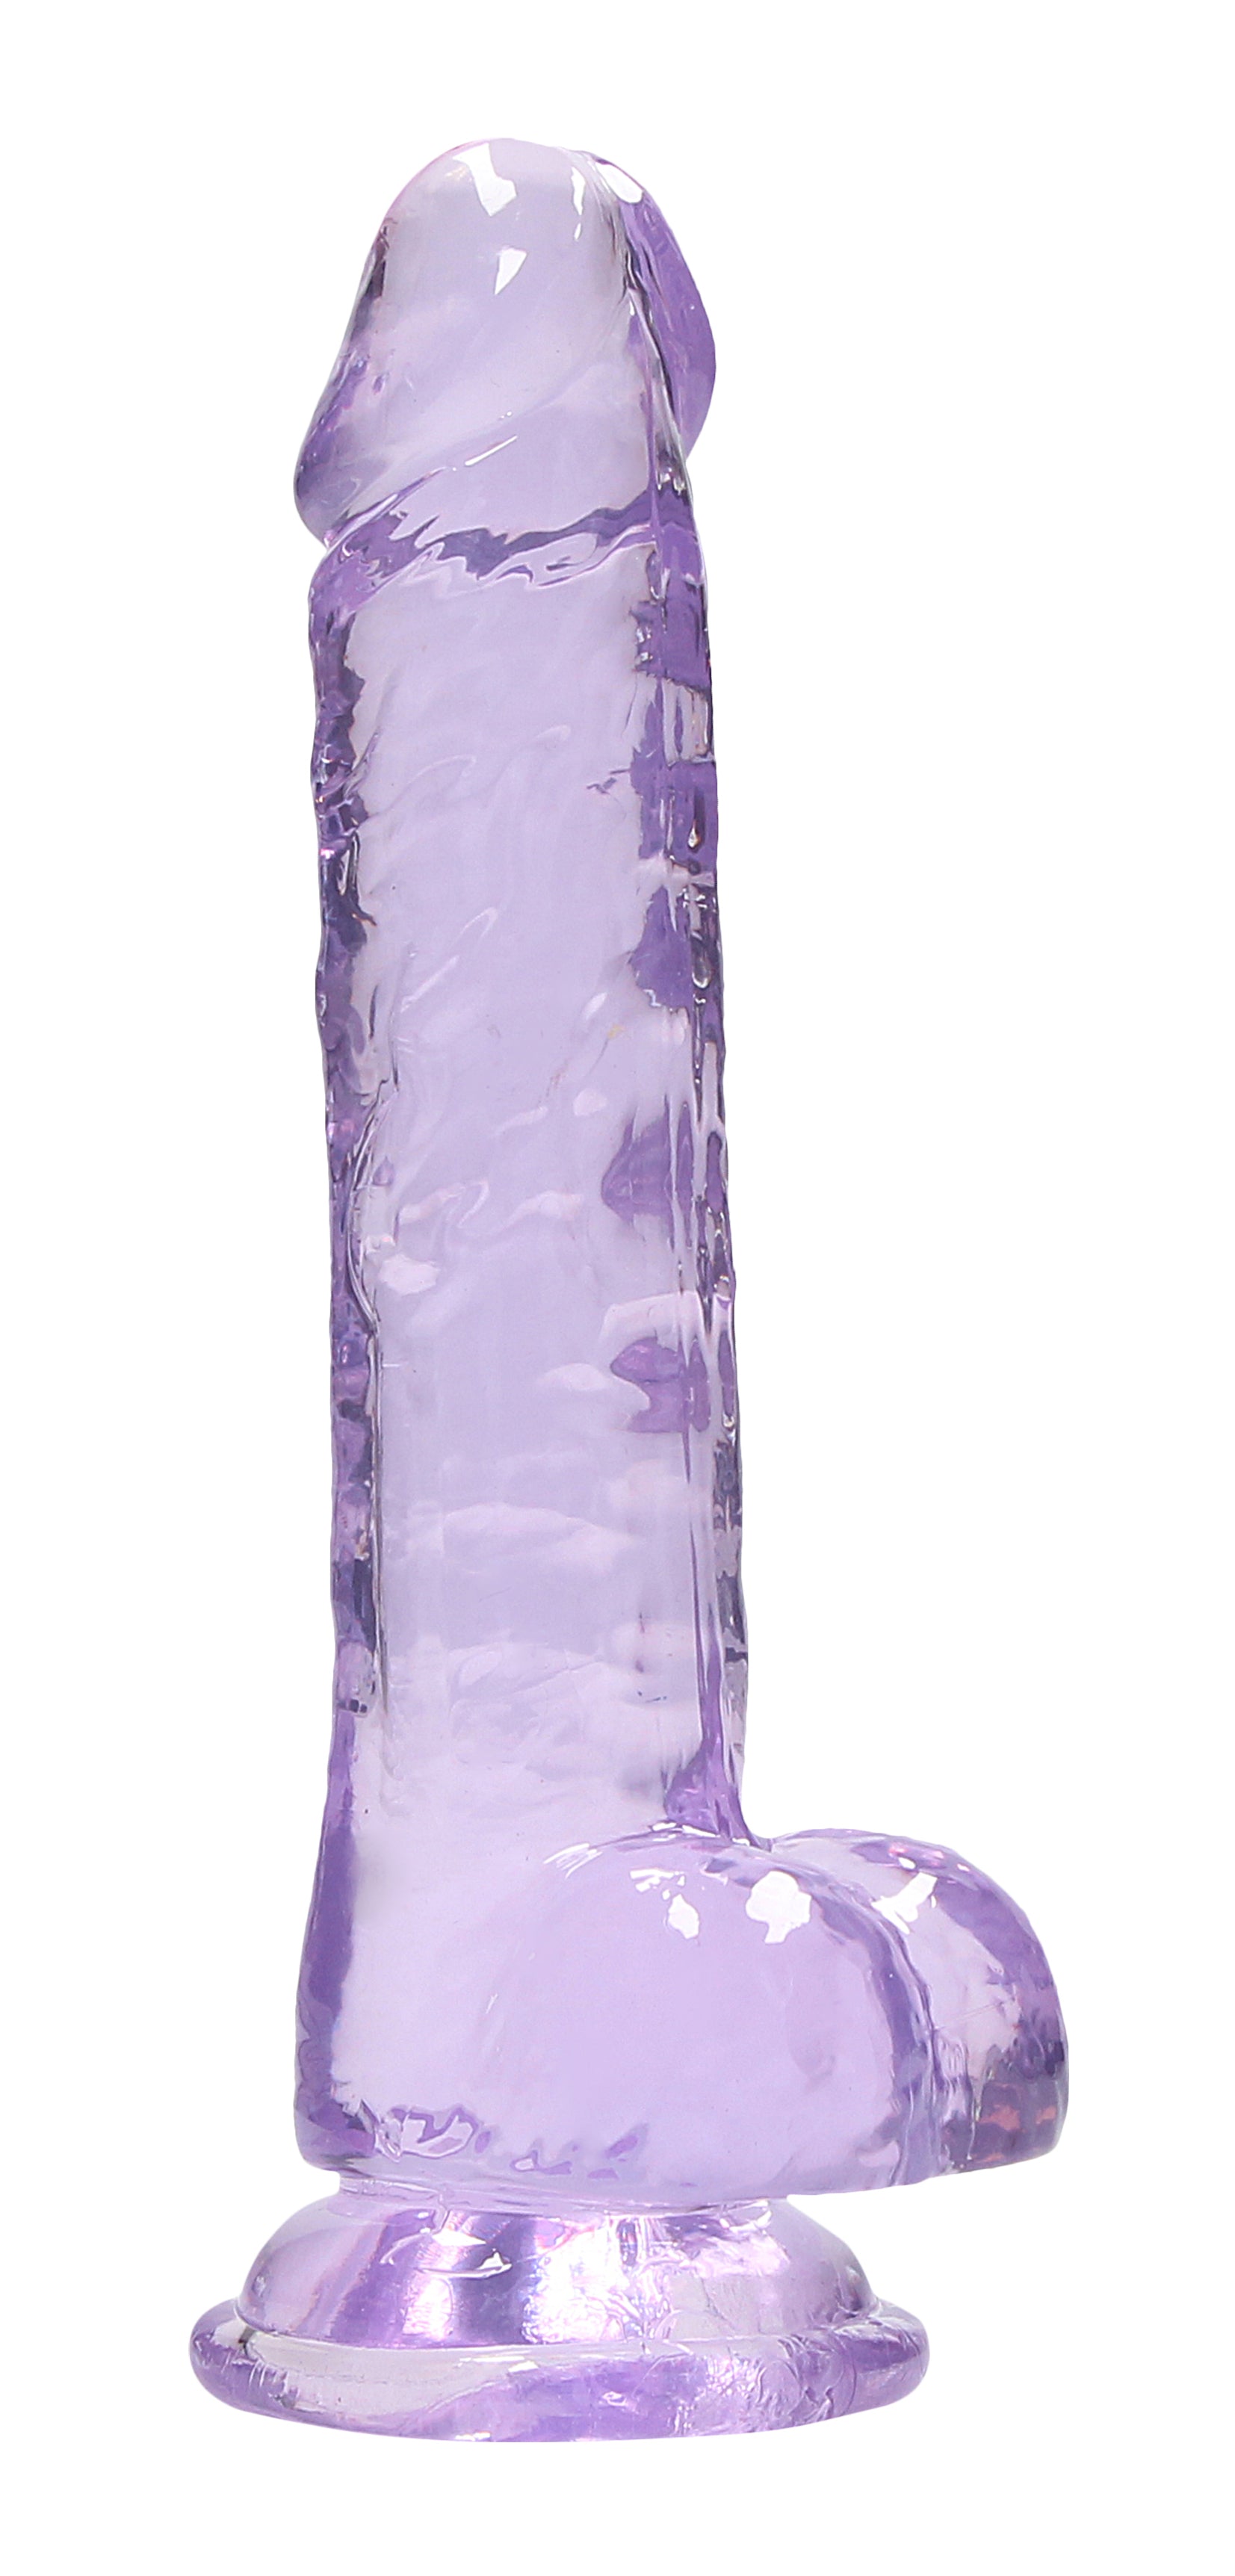 7 Inch Realistic Dildo With Balls - Purple